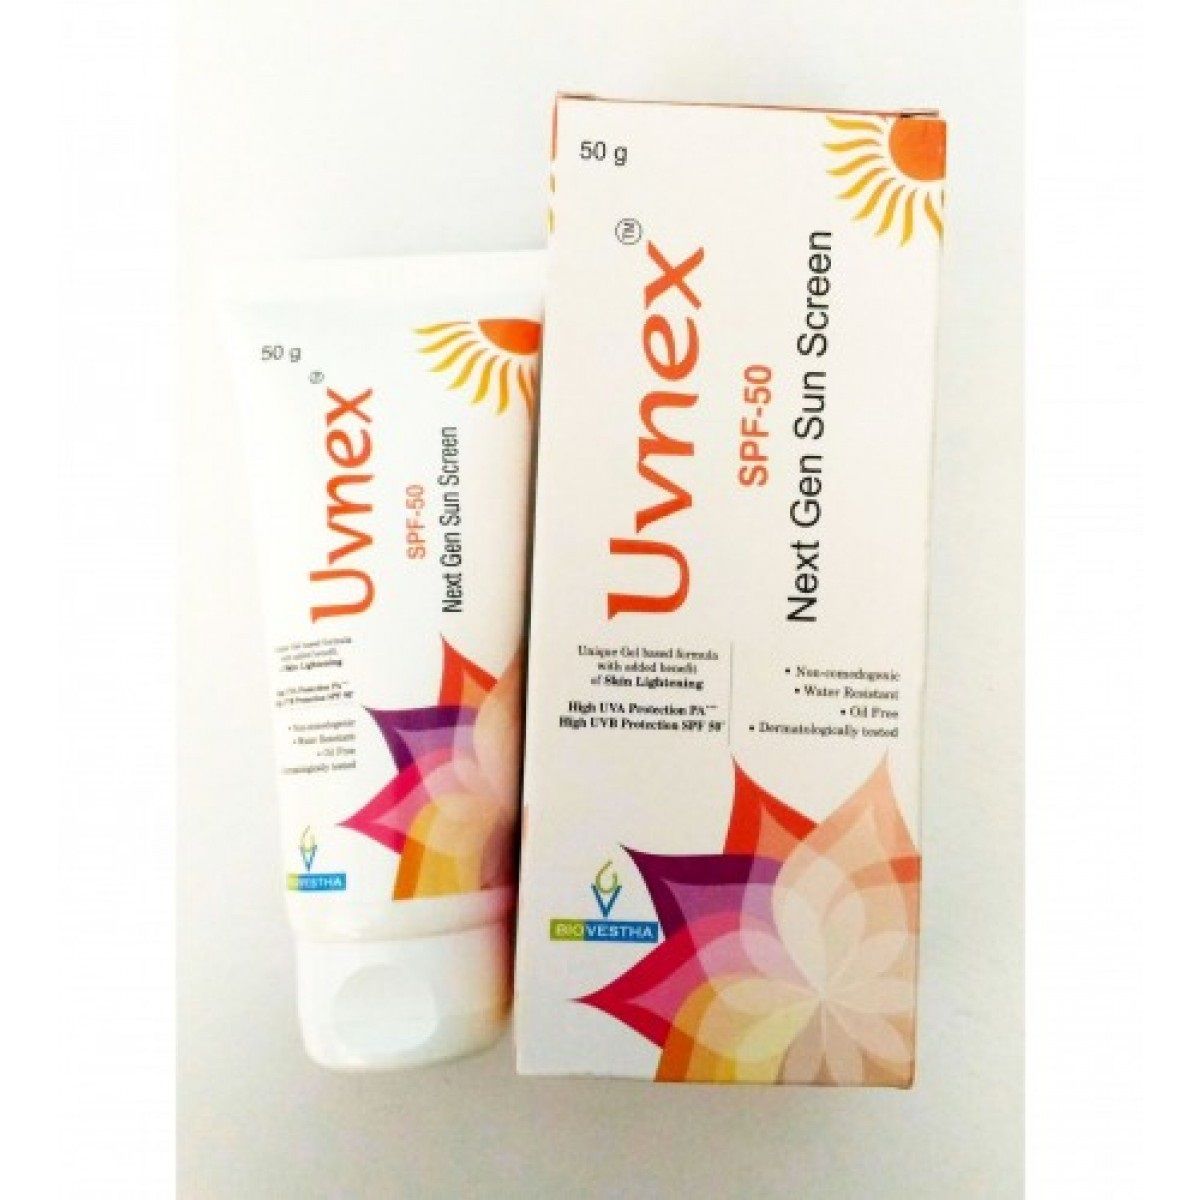 Uvnex Sunscreen Gel SPF 50, 50 gm, Pack of 1 